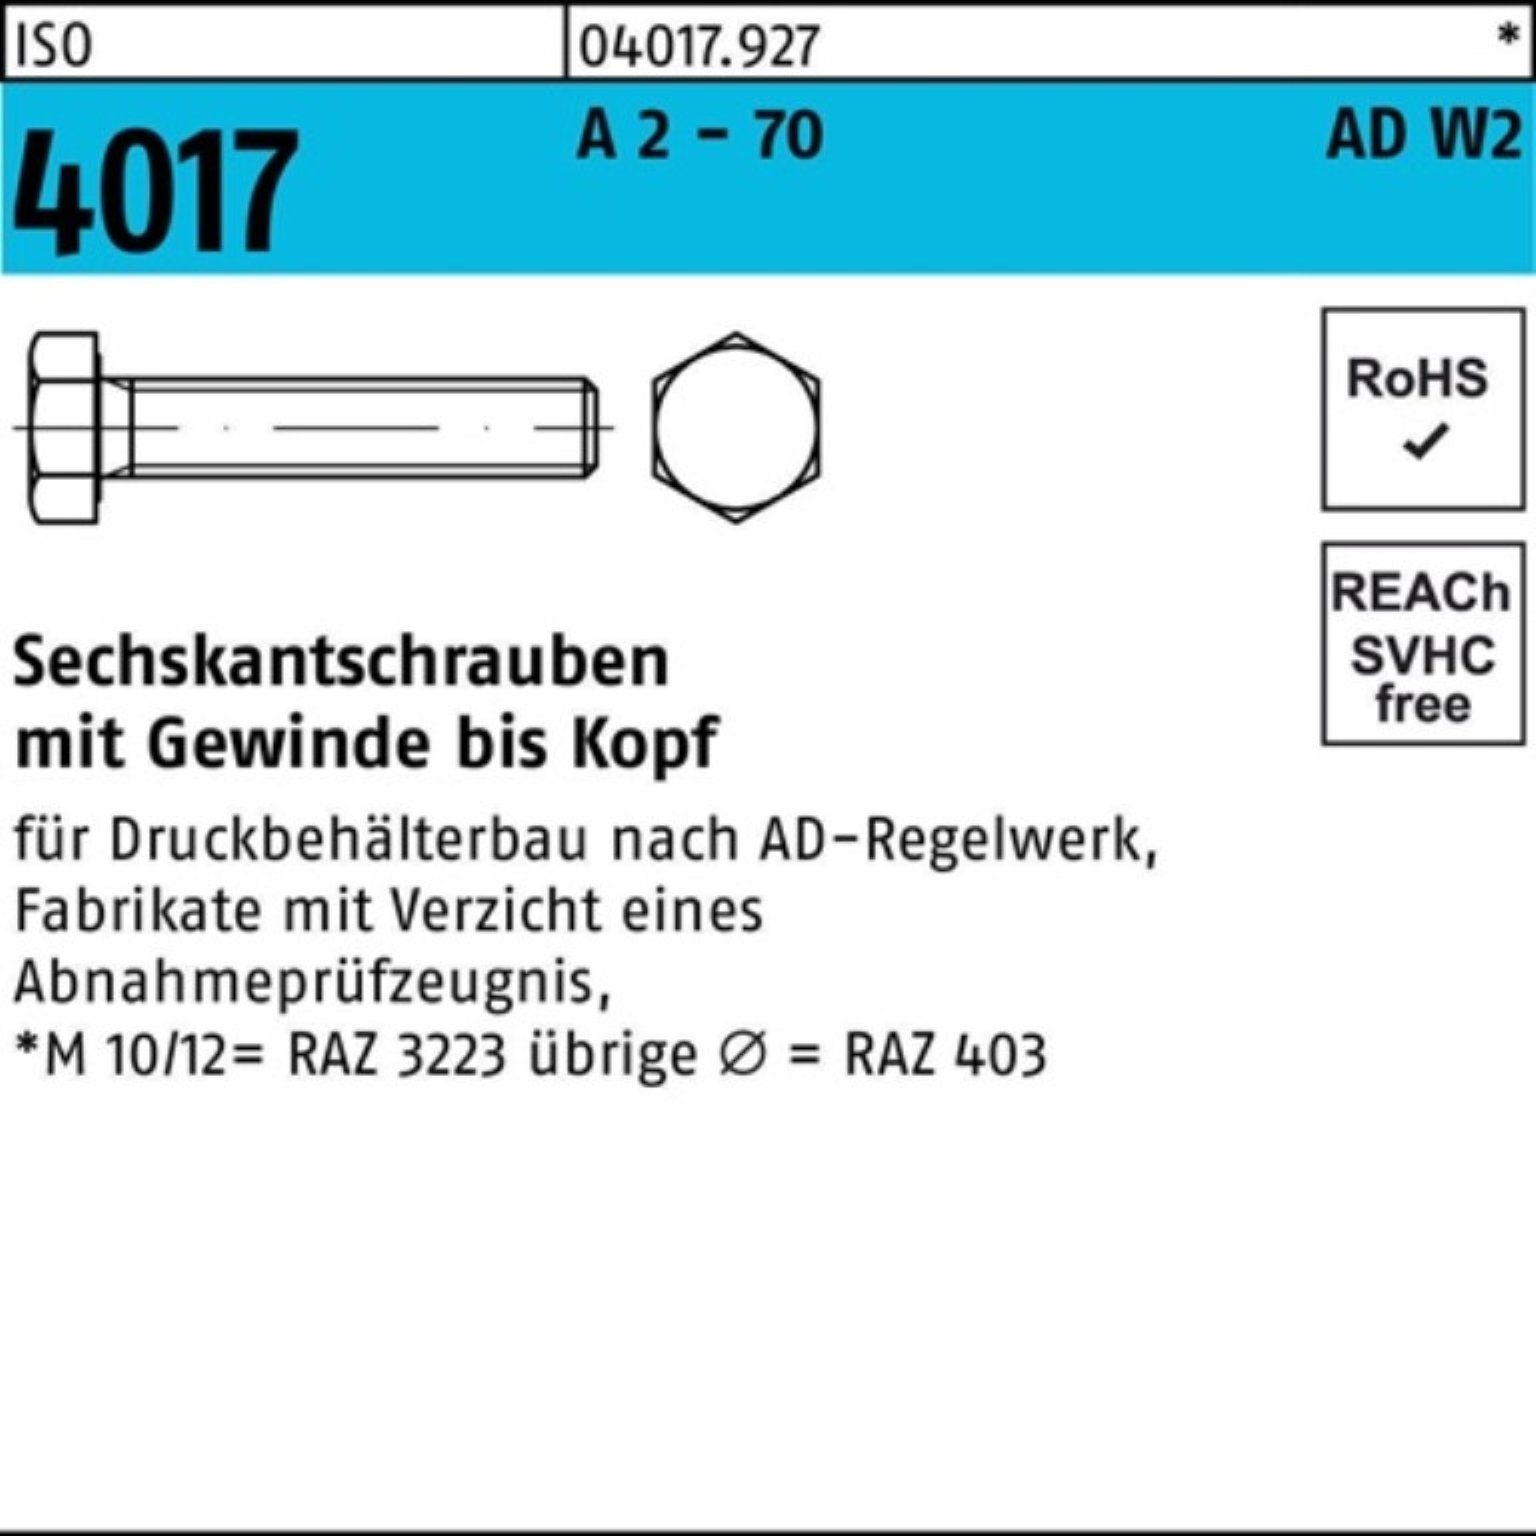 Bufab Sechskantschraube 100er Pack Sechskantschraube ISO 4017 VG M12x 60 A 2 - 70 AD-W2 50 St